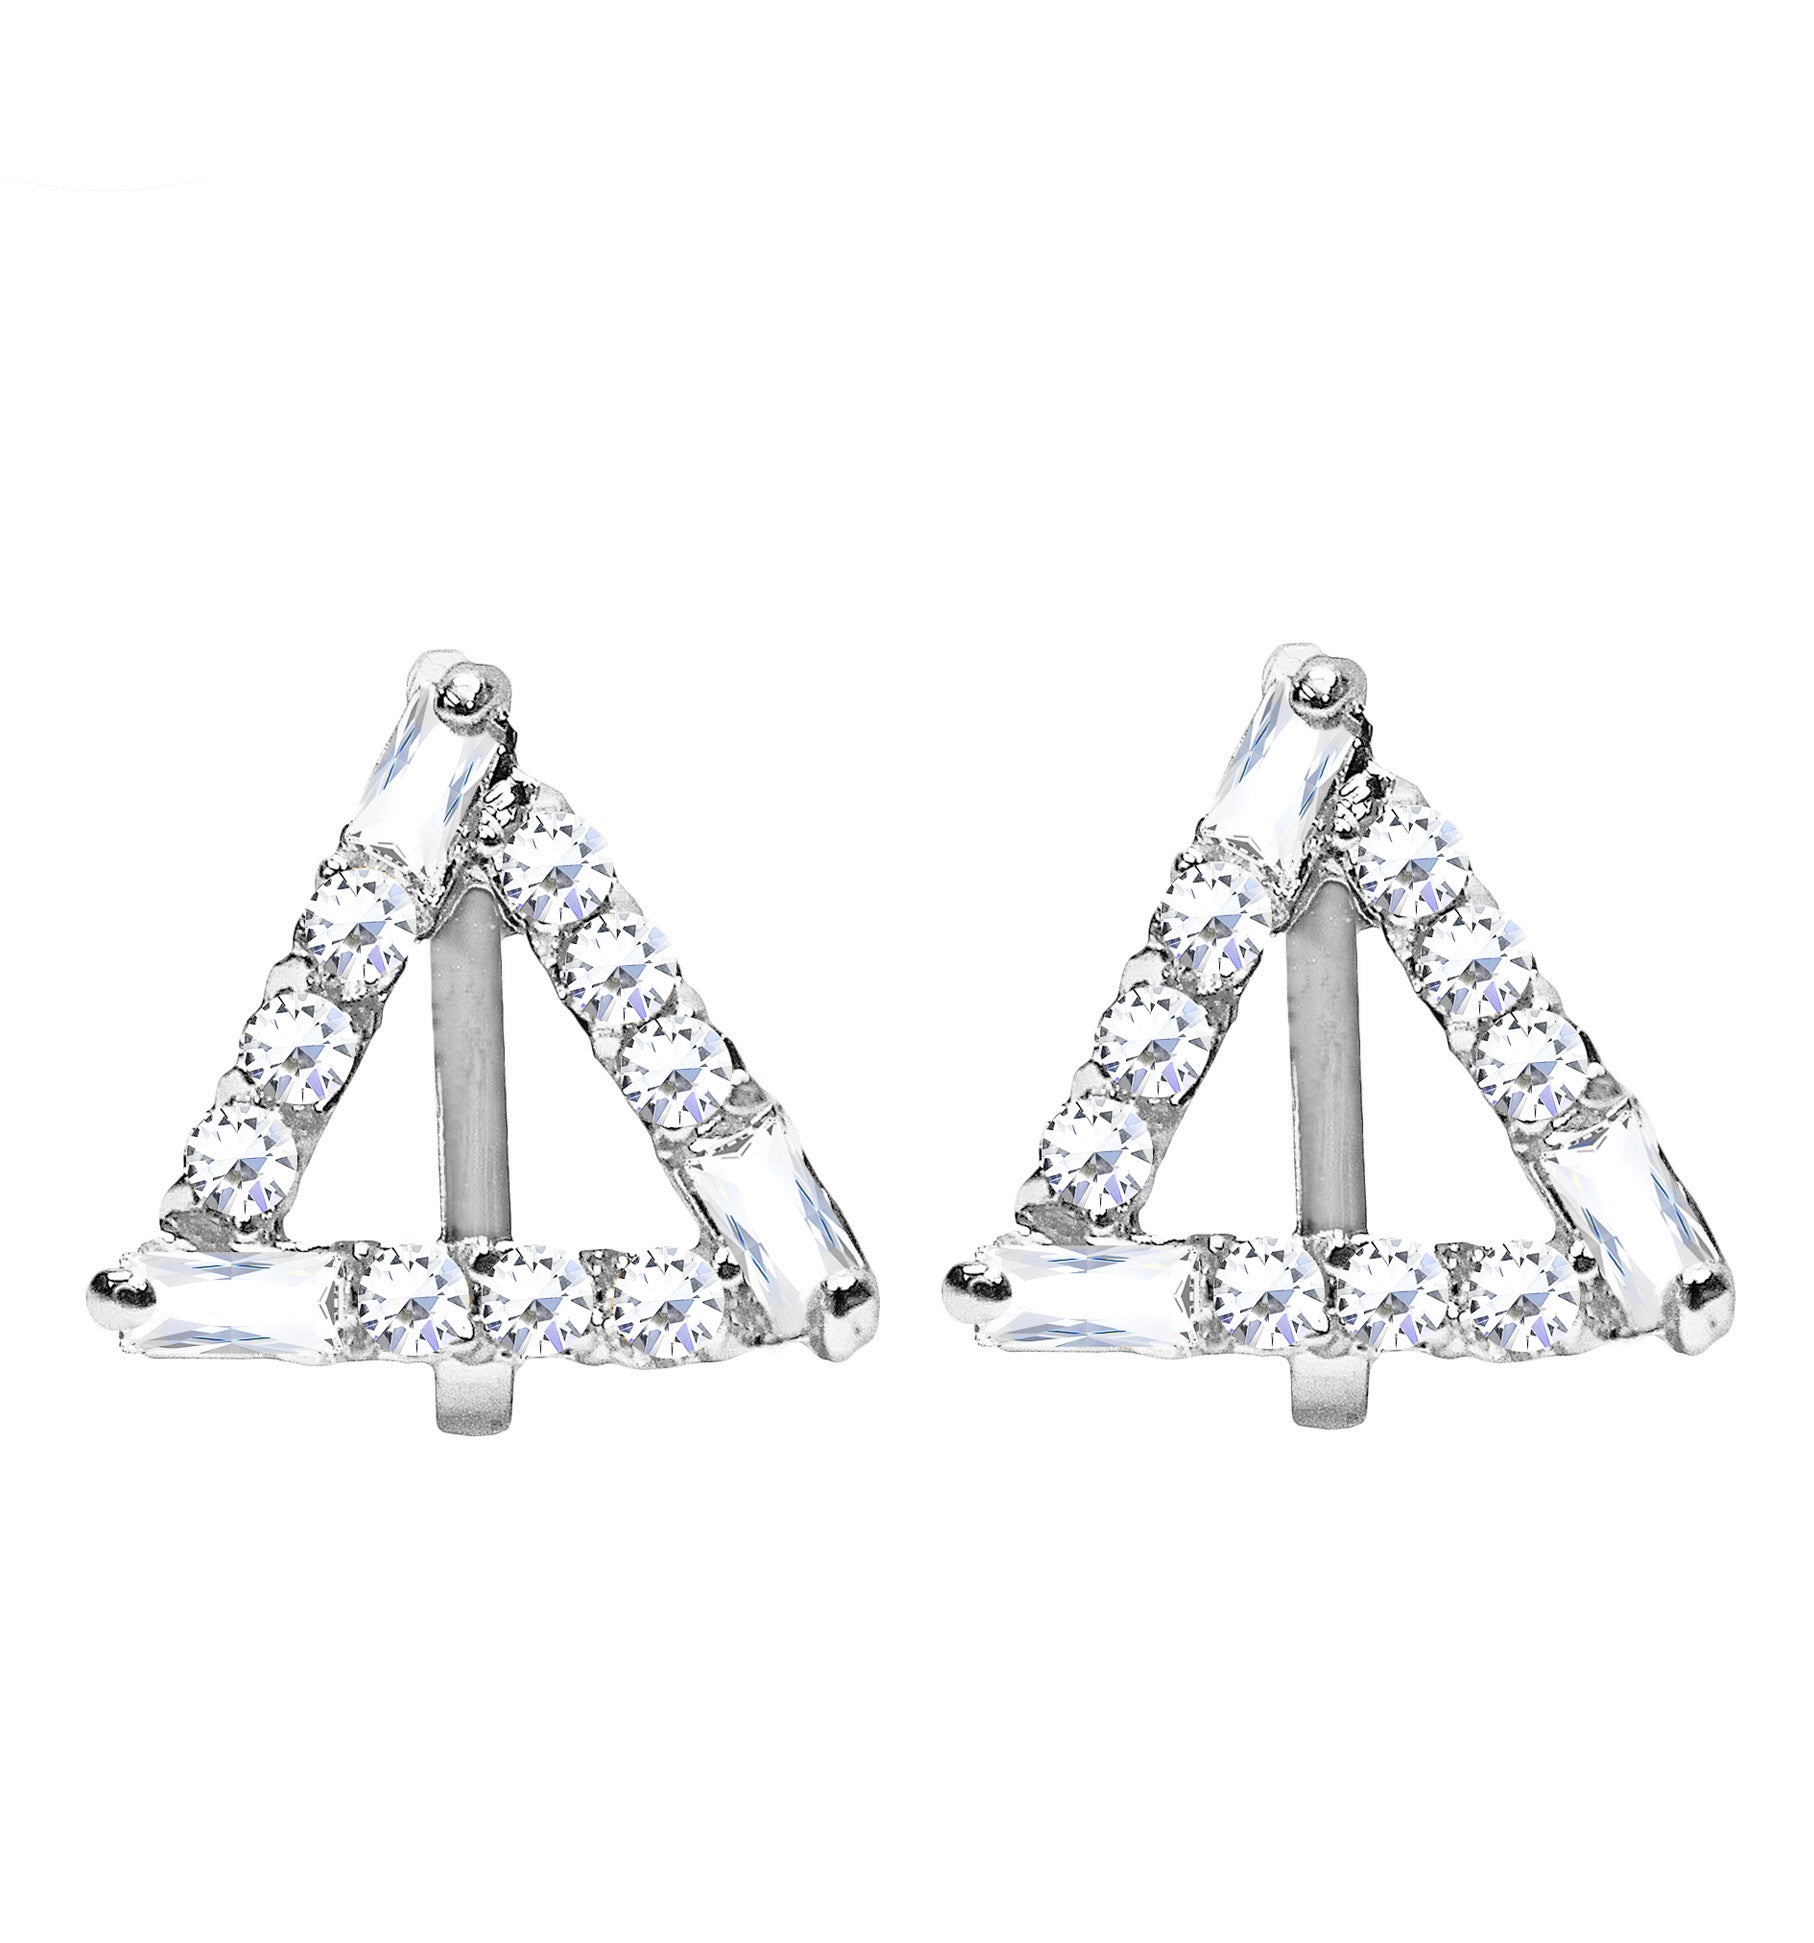 CLIP ON Women's Crystal Silver Geometric Triangle Earrings Jewelry Ladies Girls